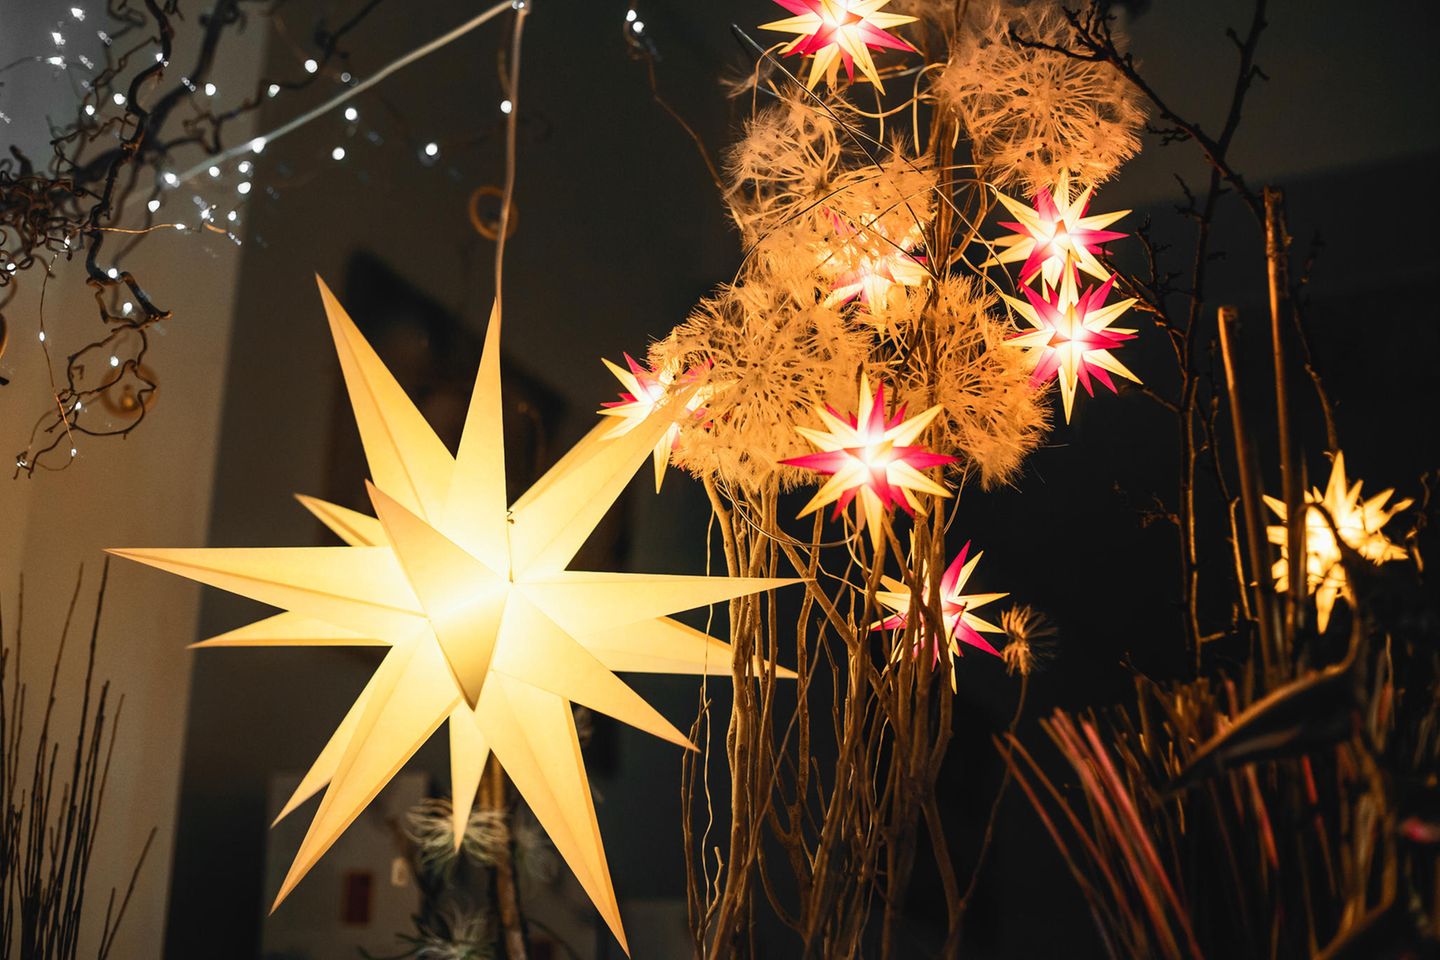 Making poinsettias: poinsettia, shining star hanging in the window, DIY poinsettia